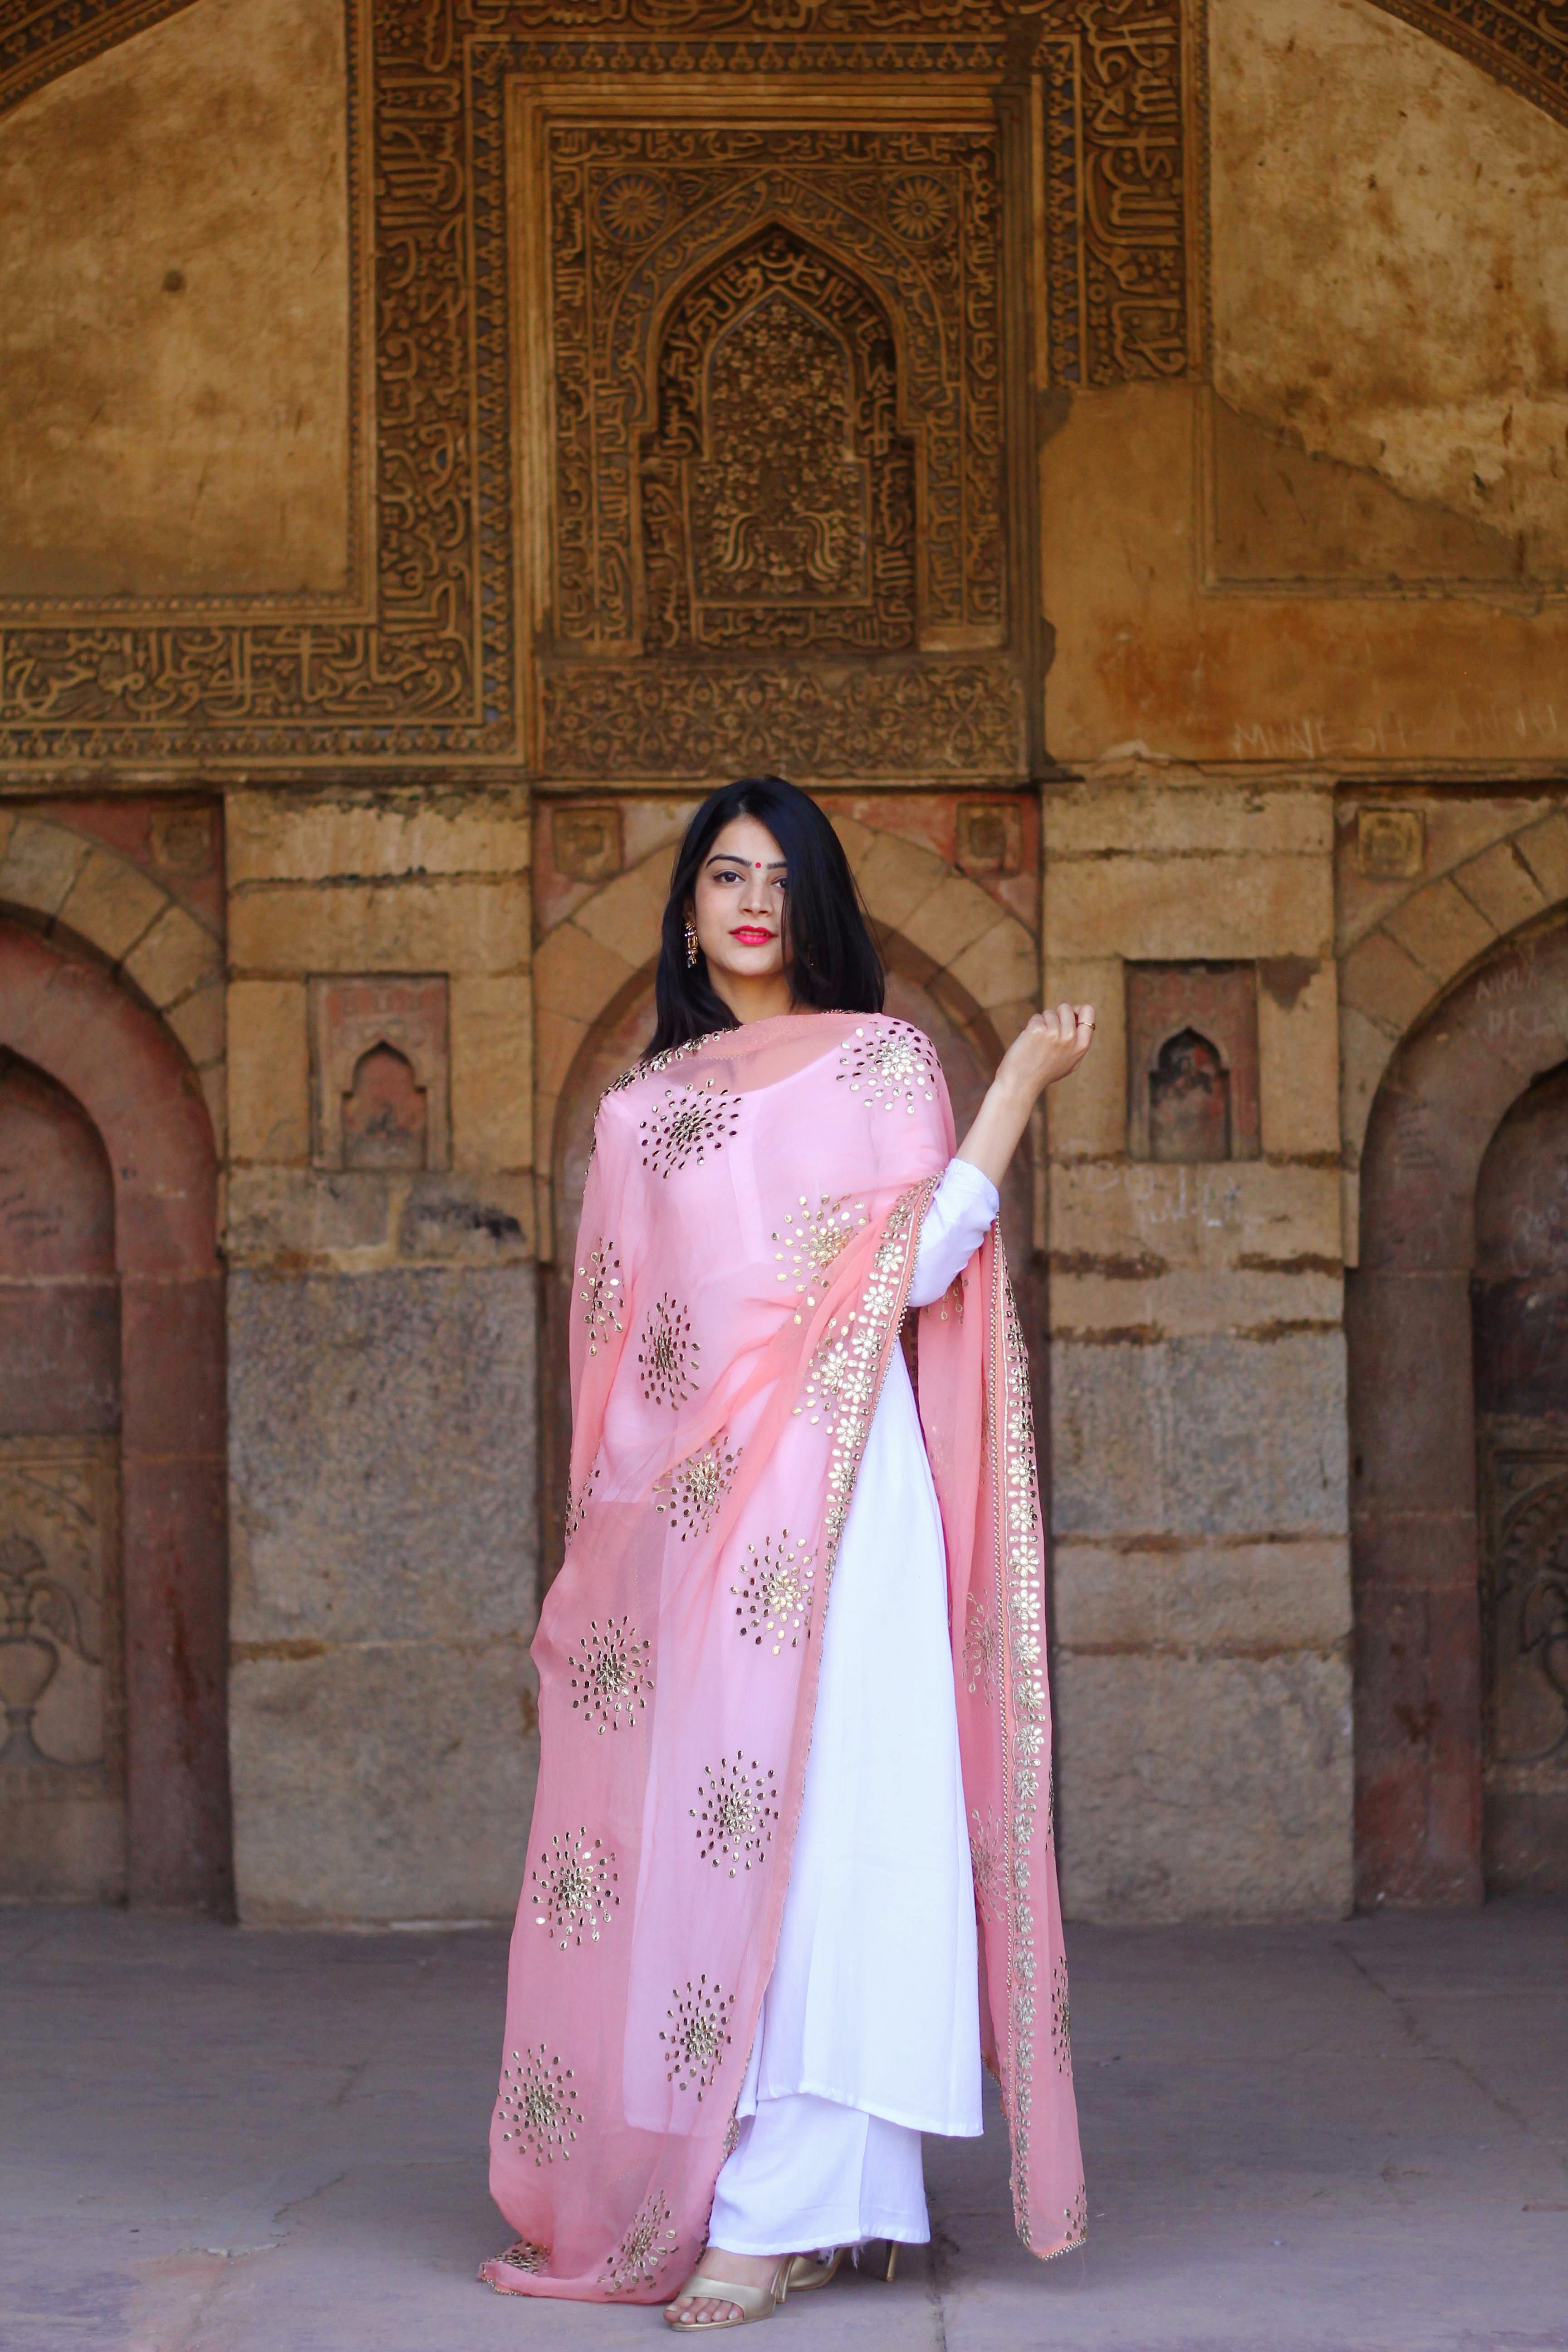 Clothing,Pink,Lady,Peach,Sari,Textile,Temple,Long hair,Formal wear,Art